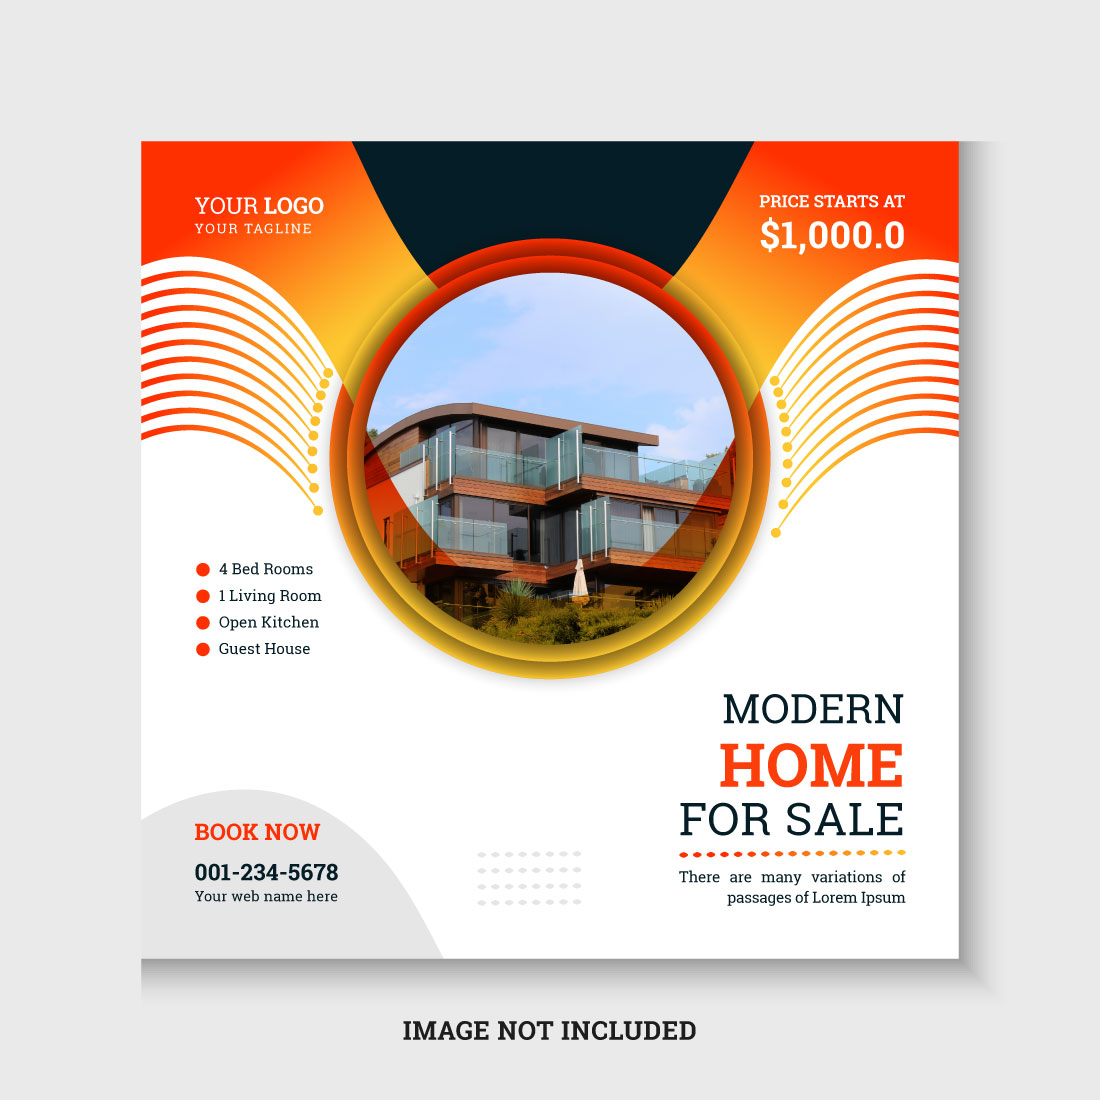 Real estate post or social media banner design template cover image.